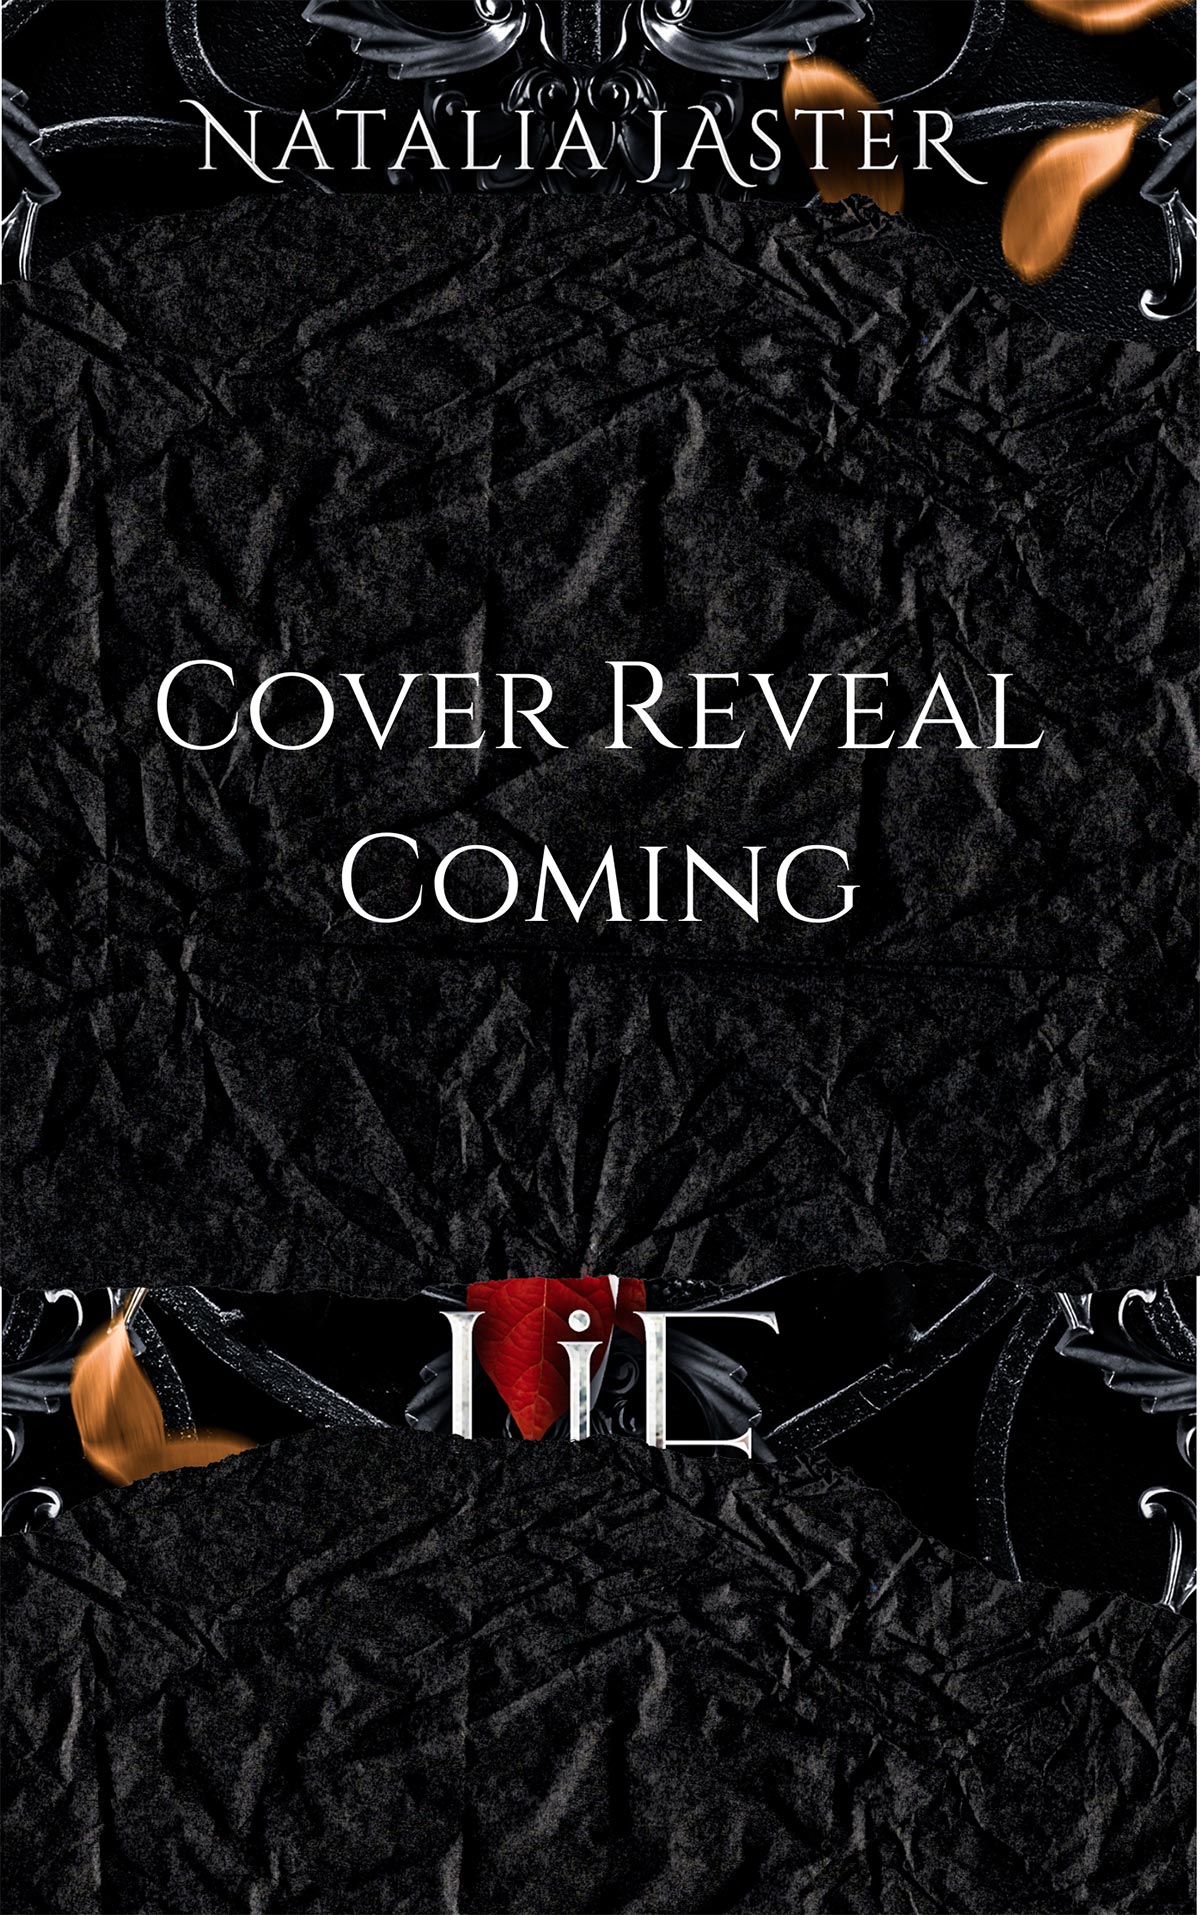 Cover Teaser for Lie by Natalia Jaster